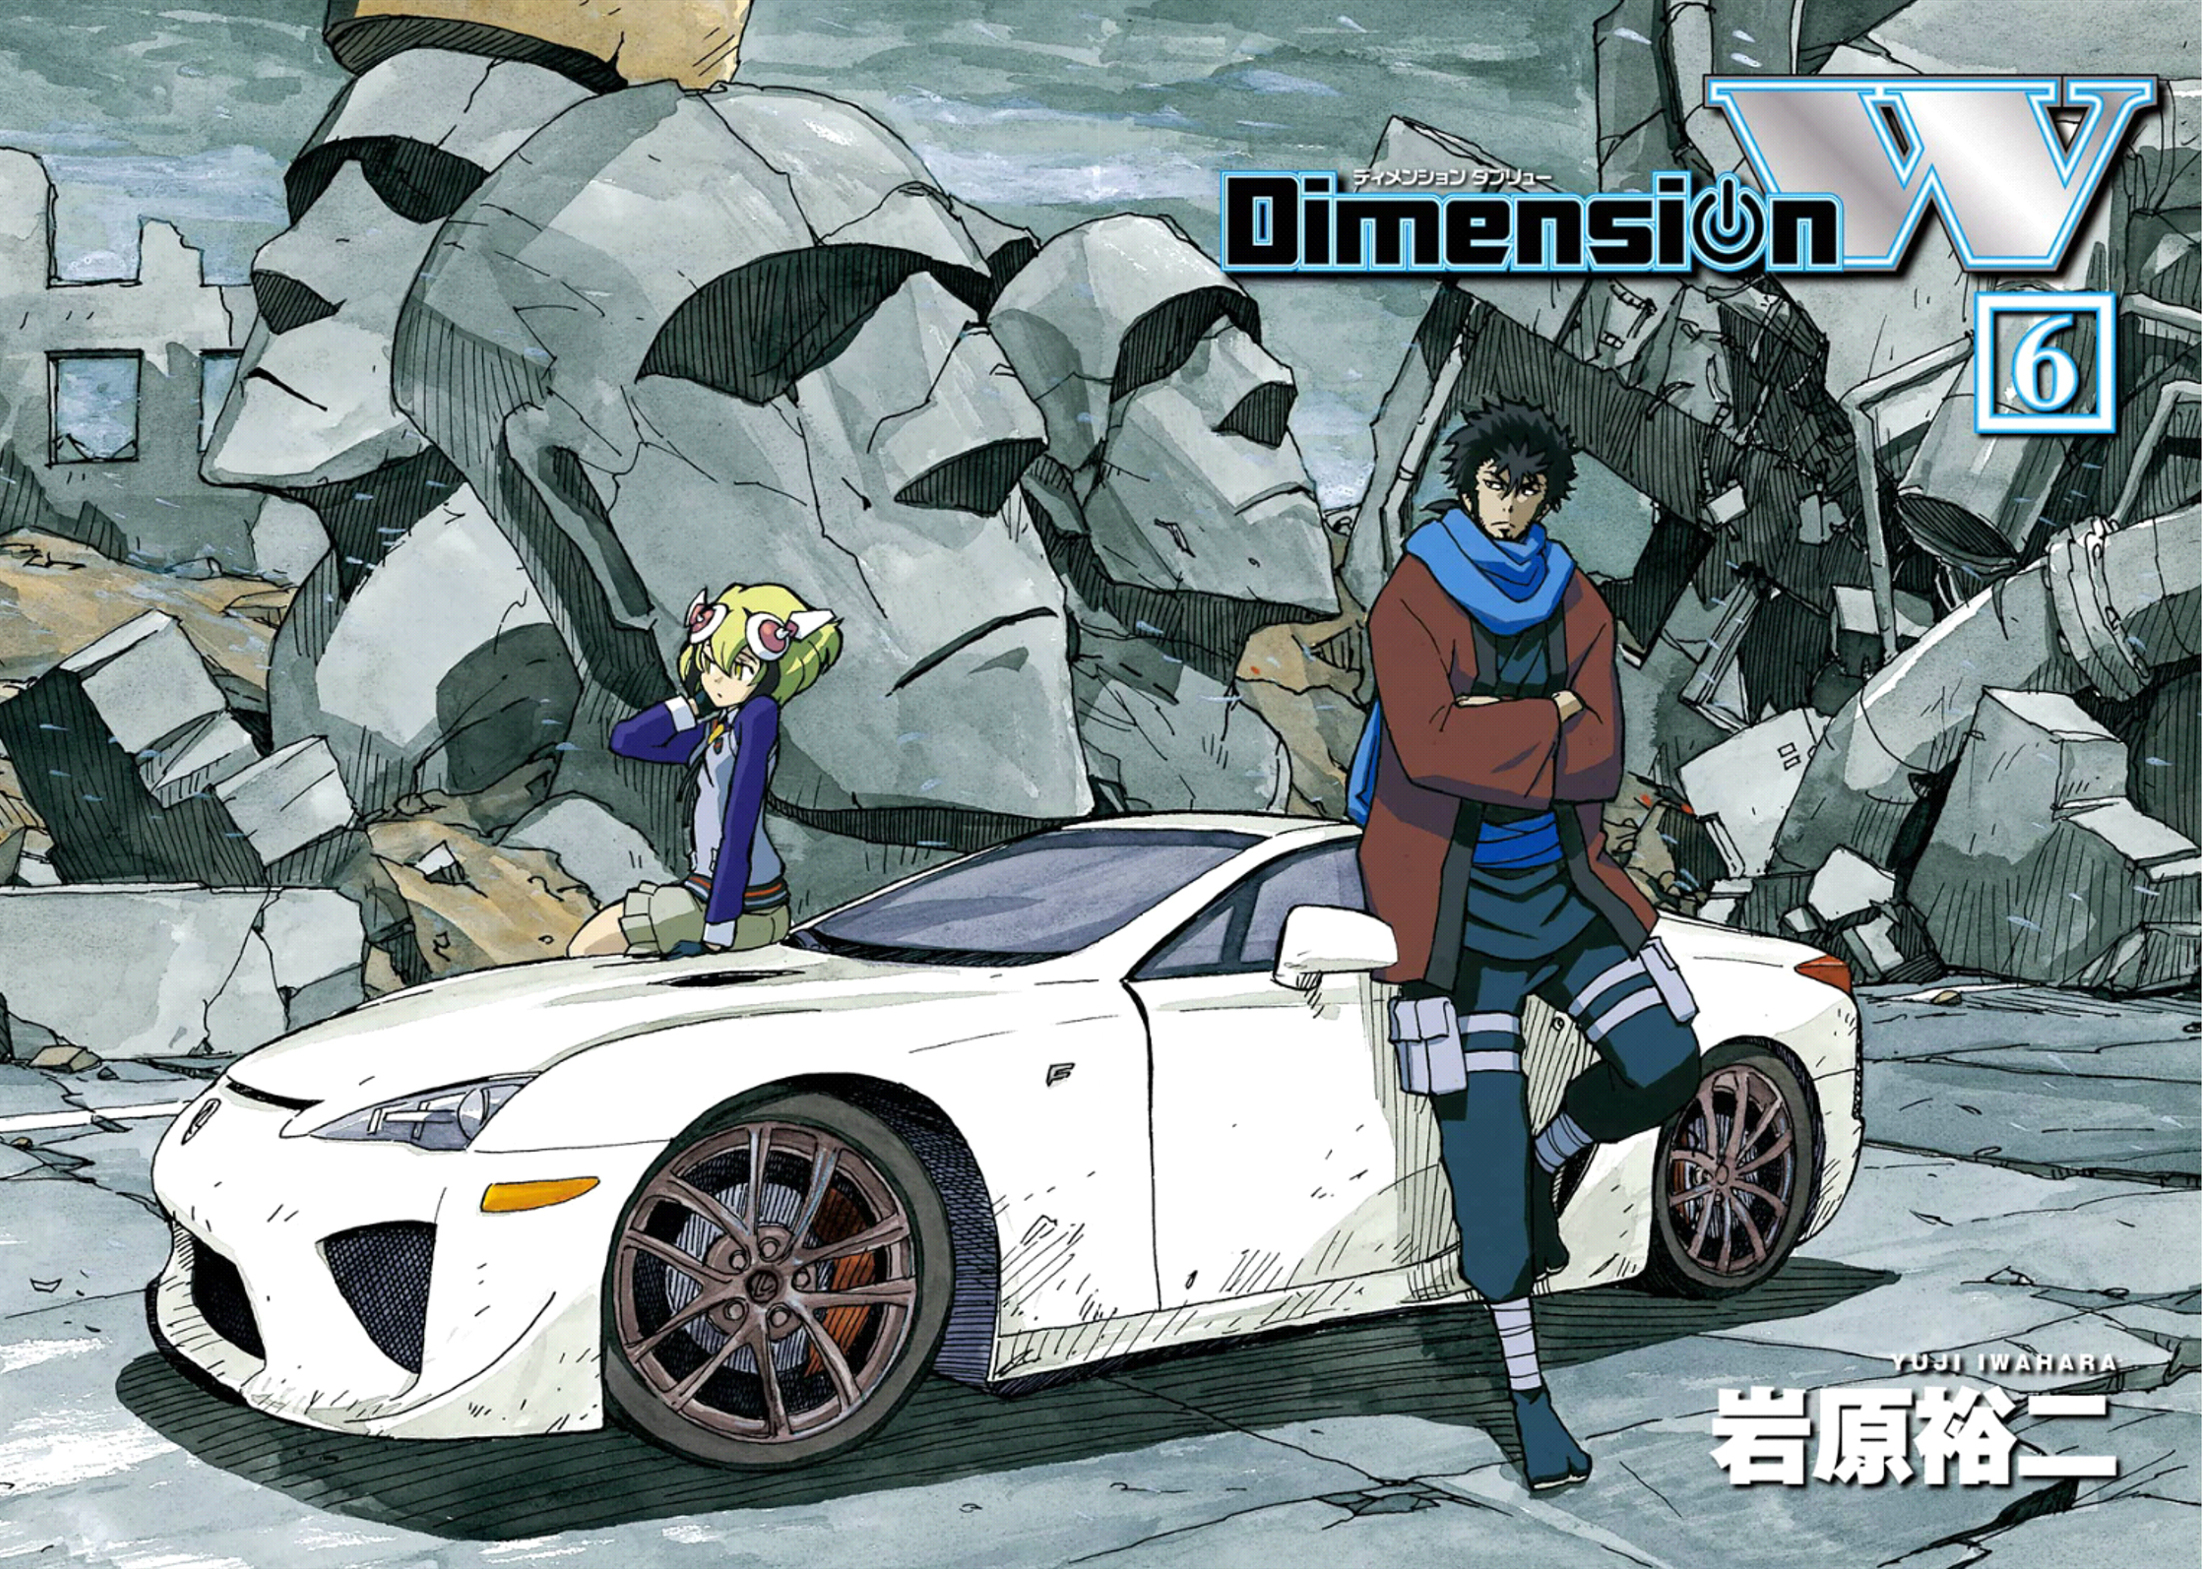 879970 descargar imagen animado, dimension w, coche, kyōma mabuchi, manga, mira yurizaki: fondos de pantalla y protectores de pantalla gratis